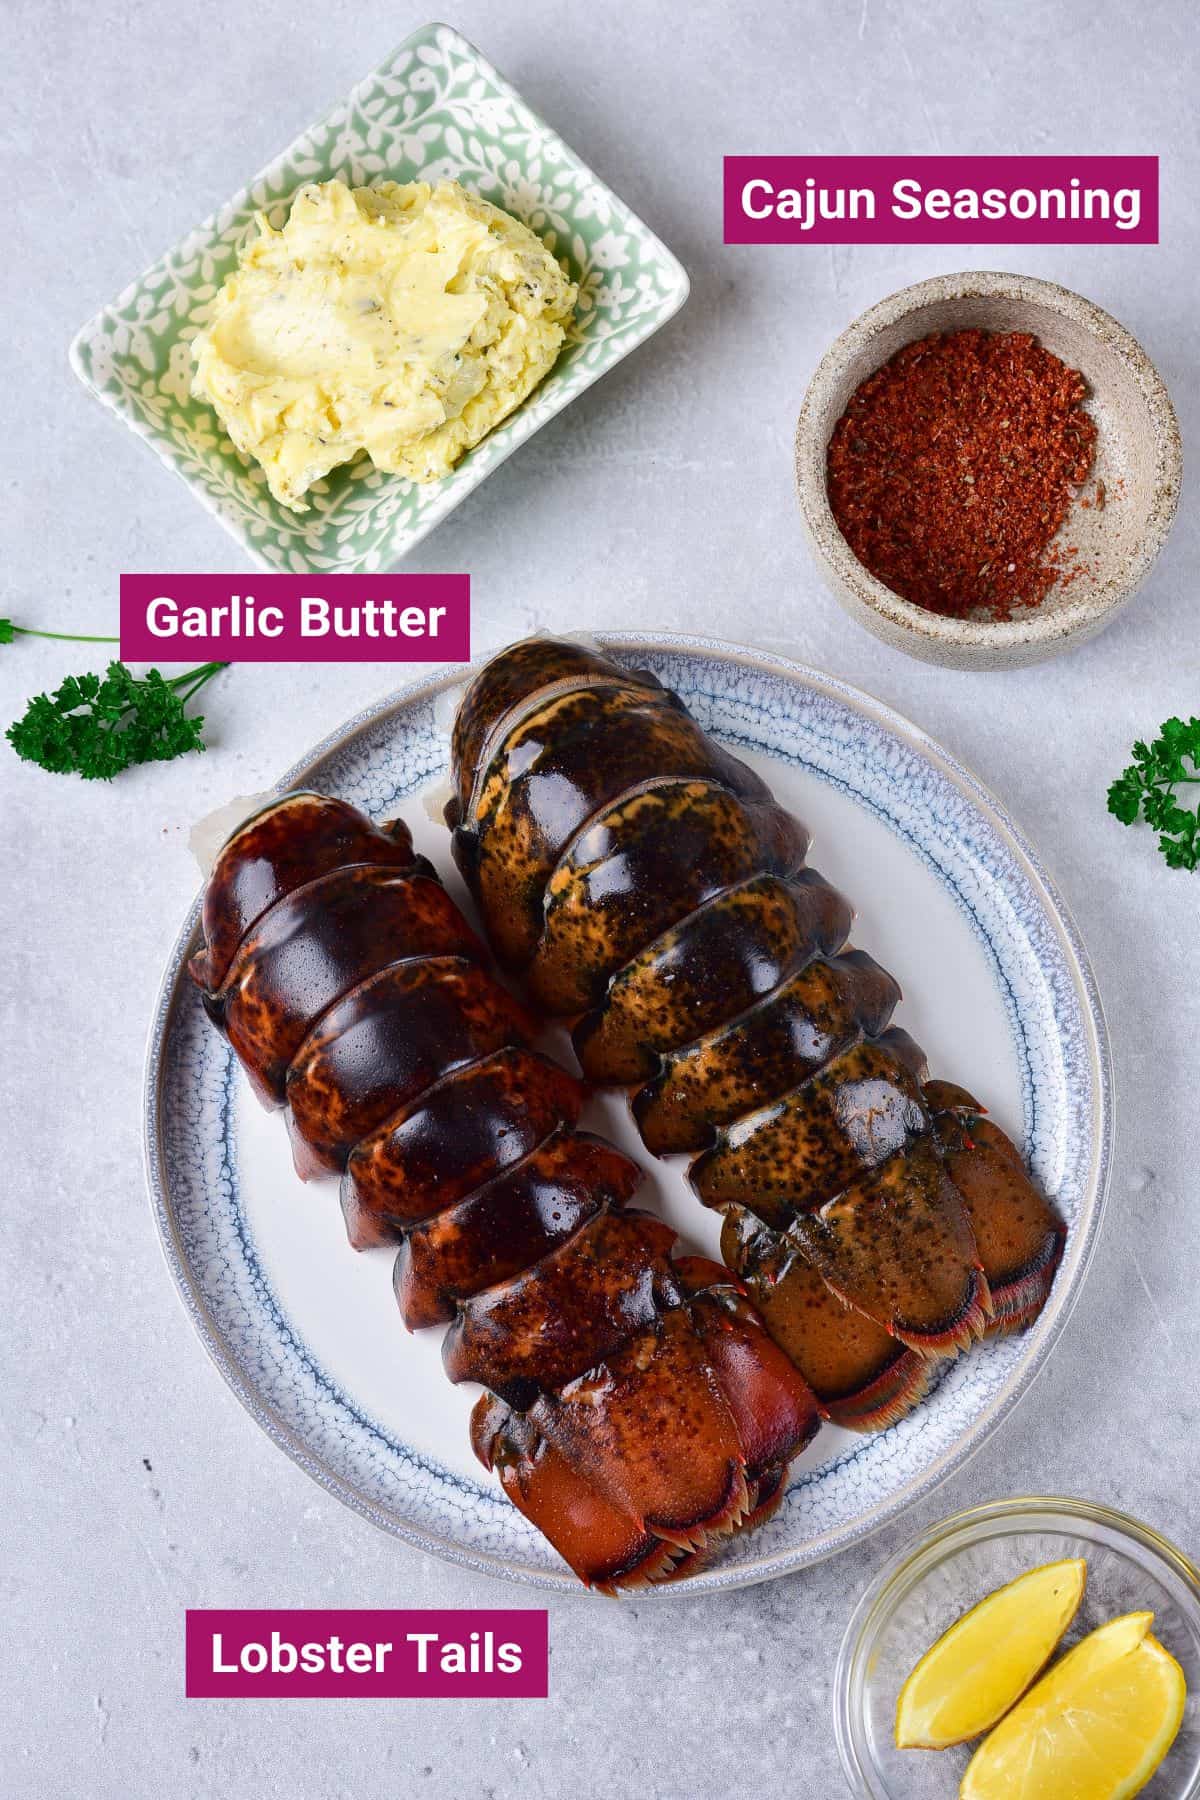 ingredients needed to make ninja air fryer lobster tails: cajun seasoning, garlic butter, lobster tails on separate plates